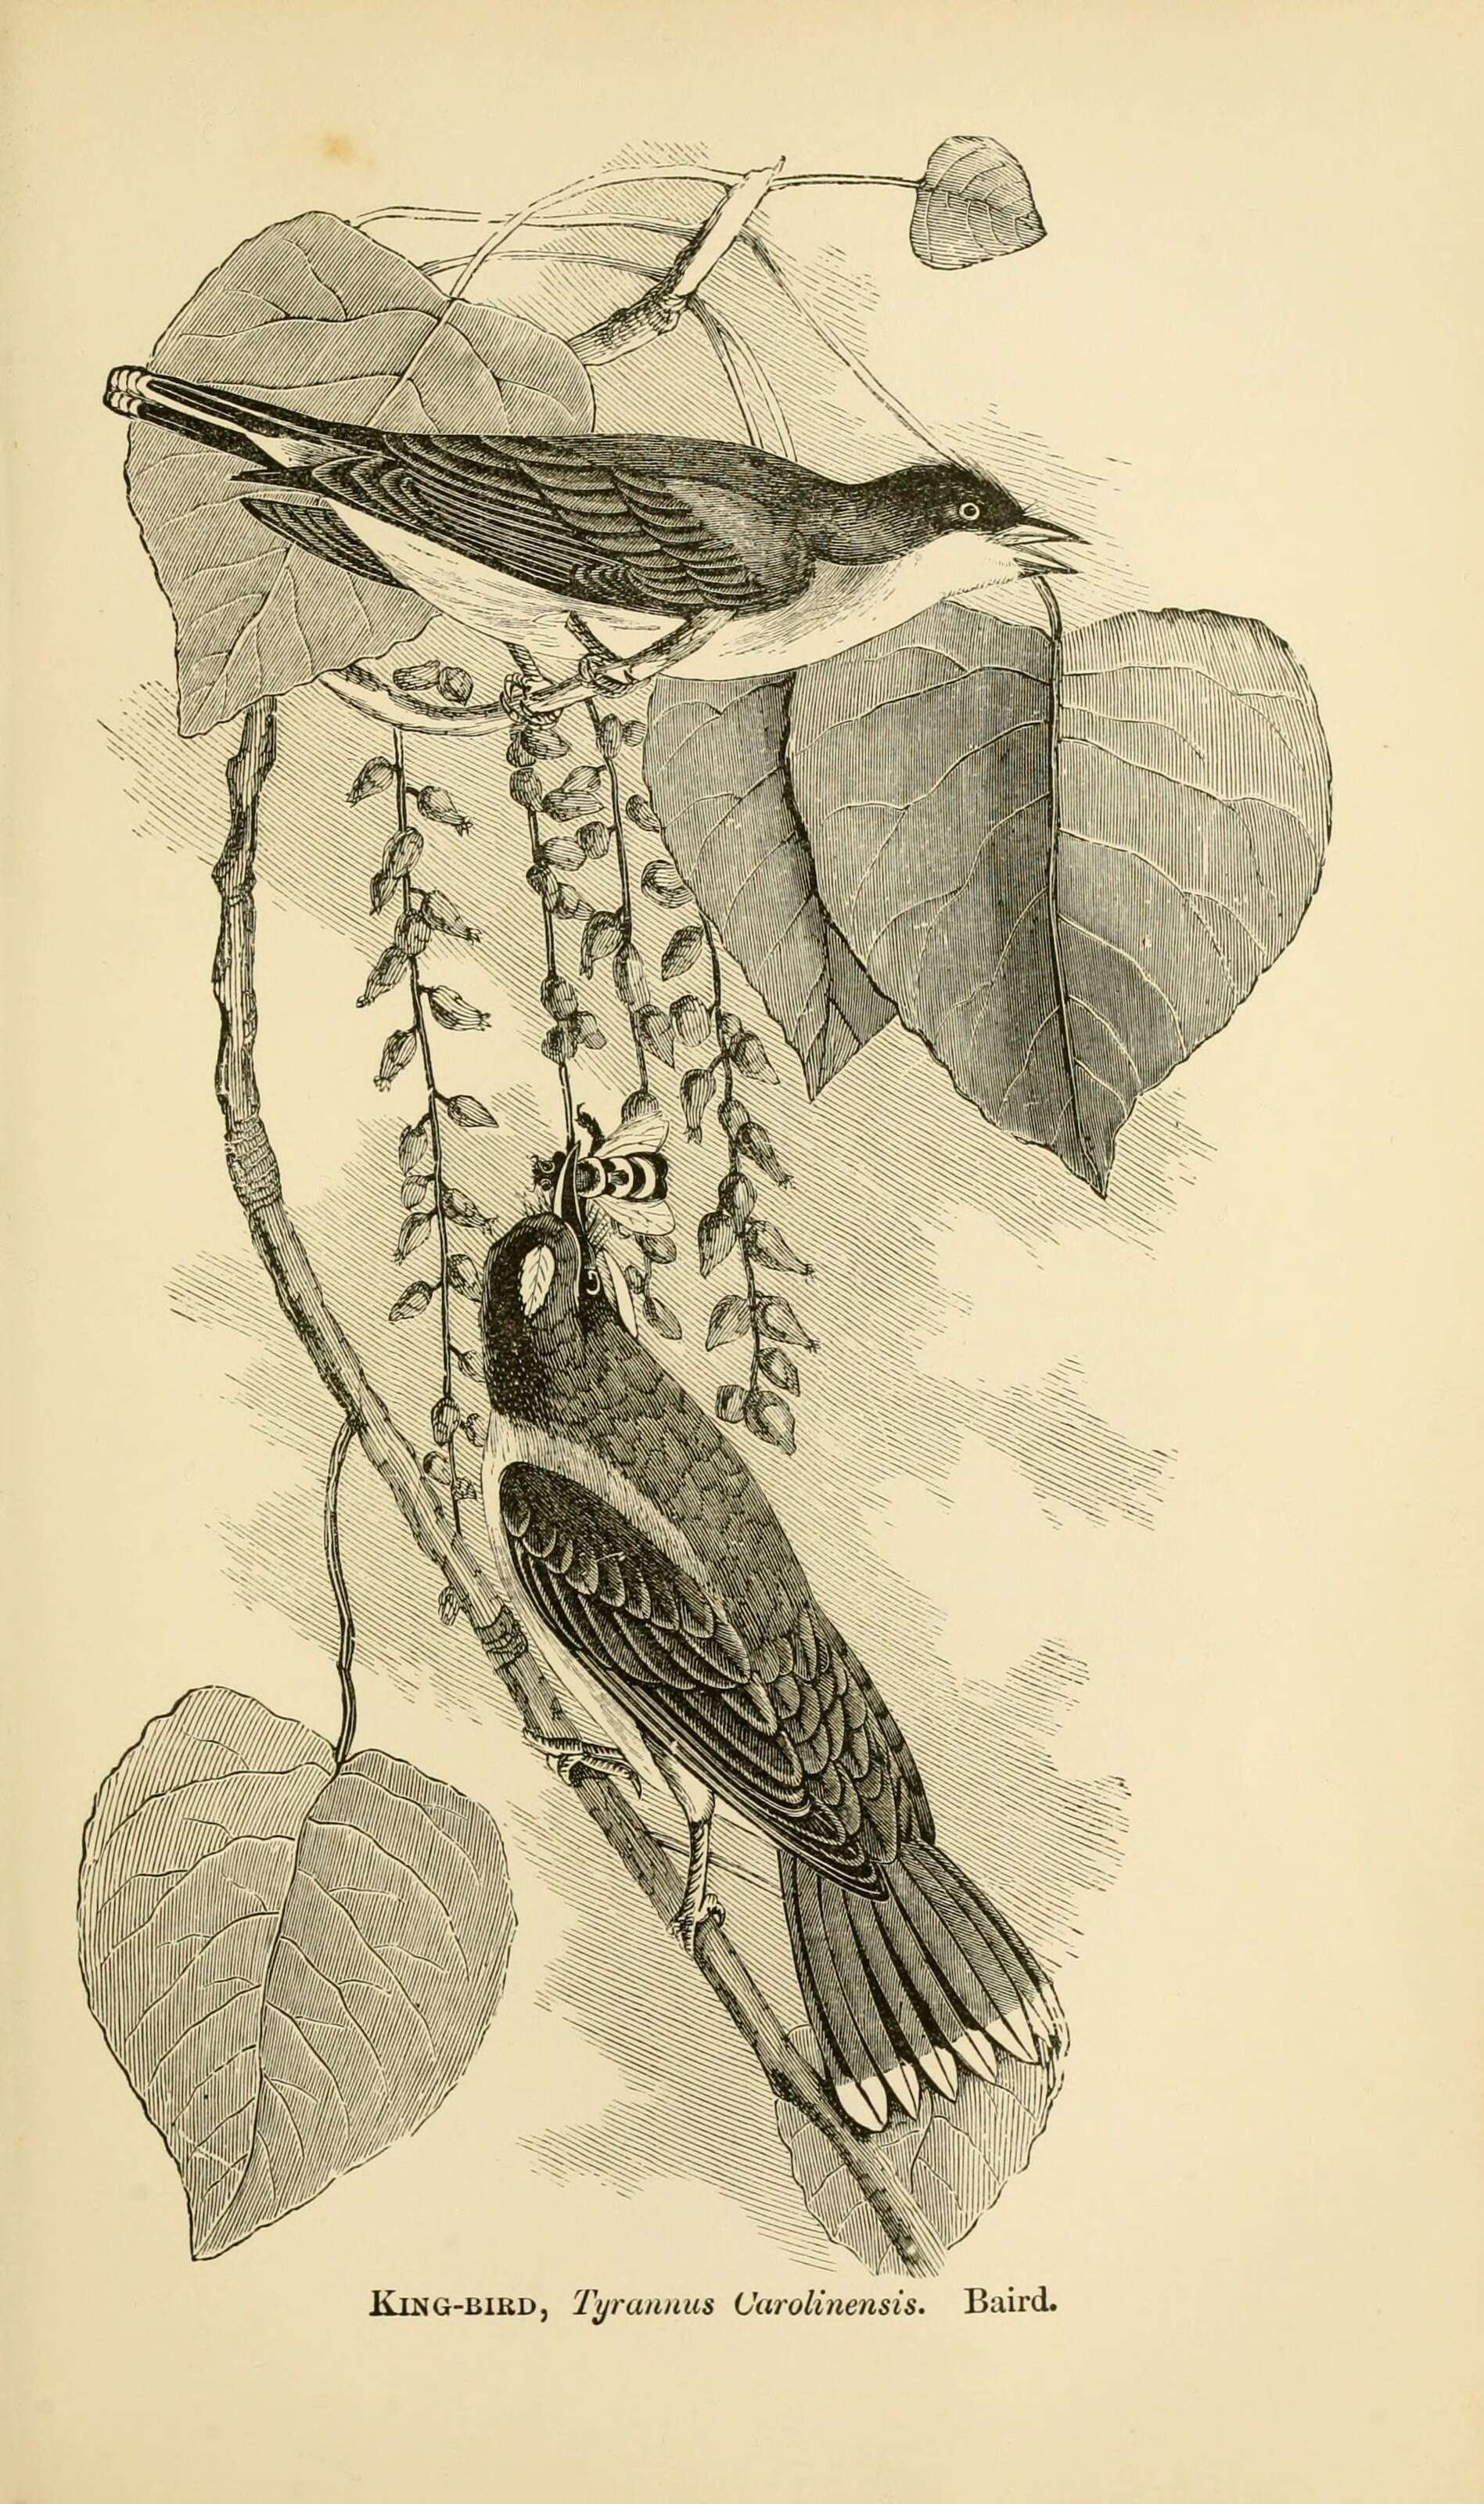 Image of Eastern Kingbird